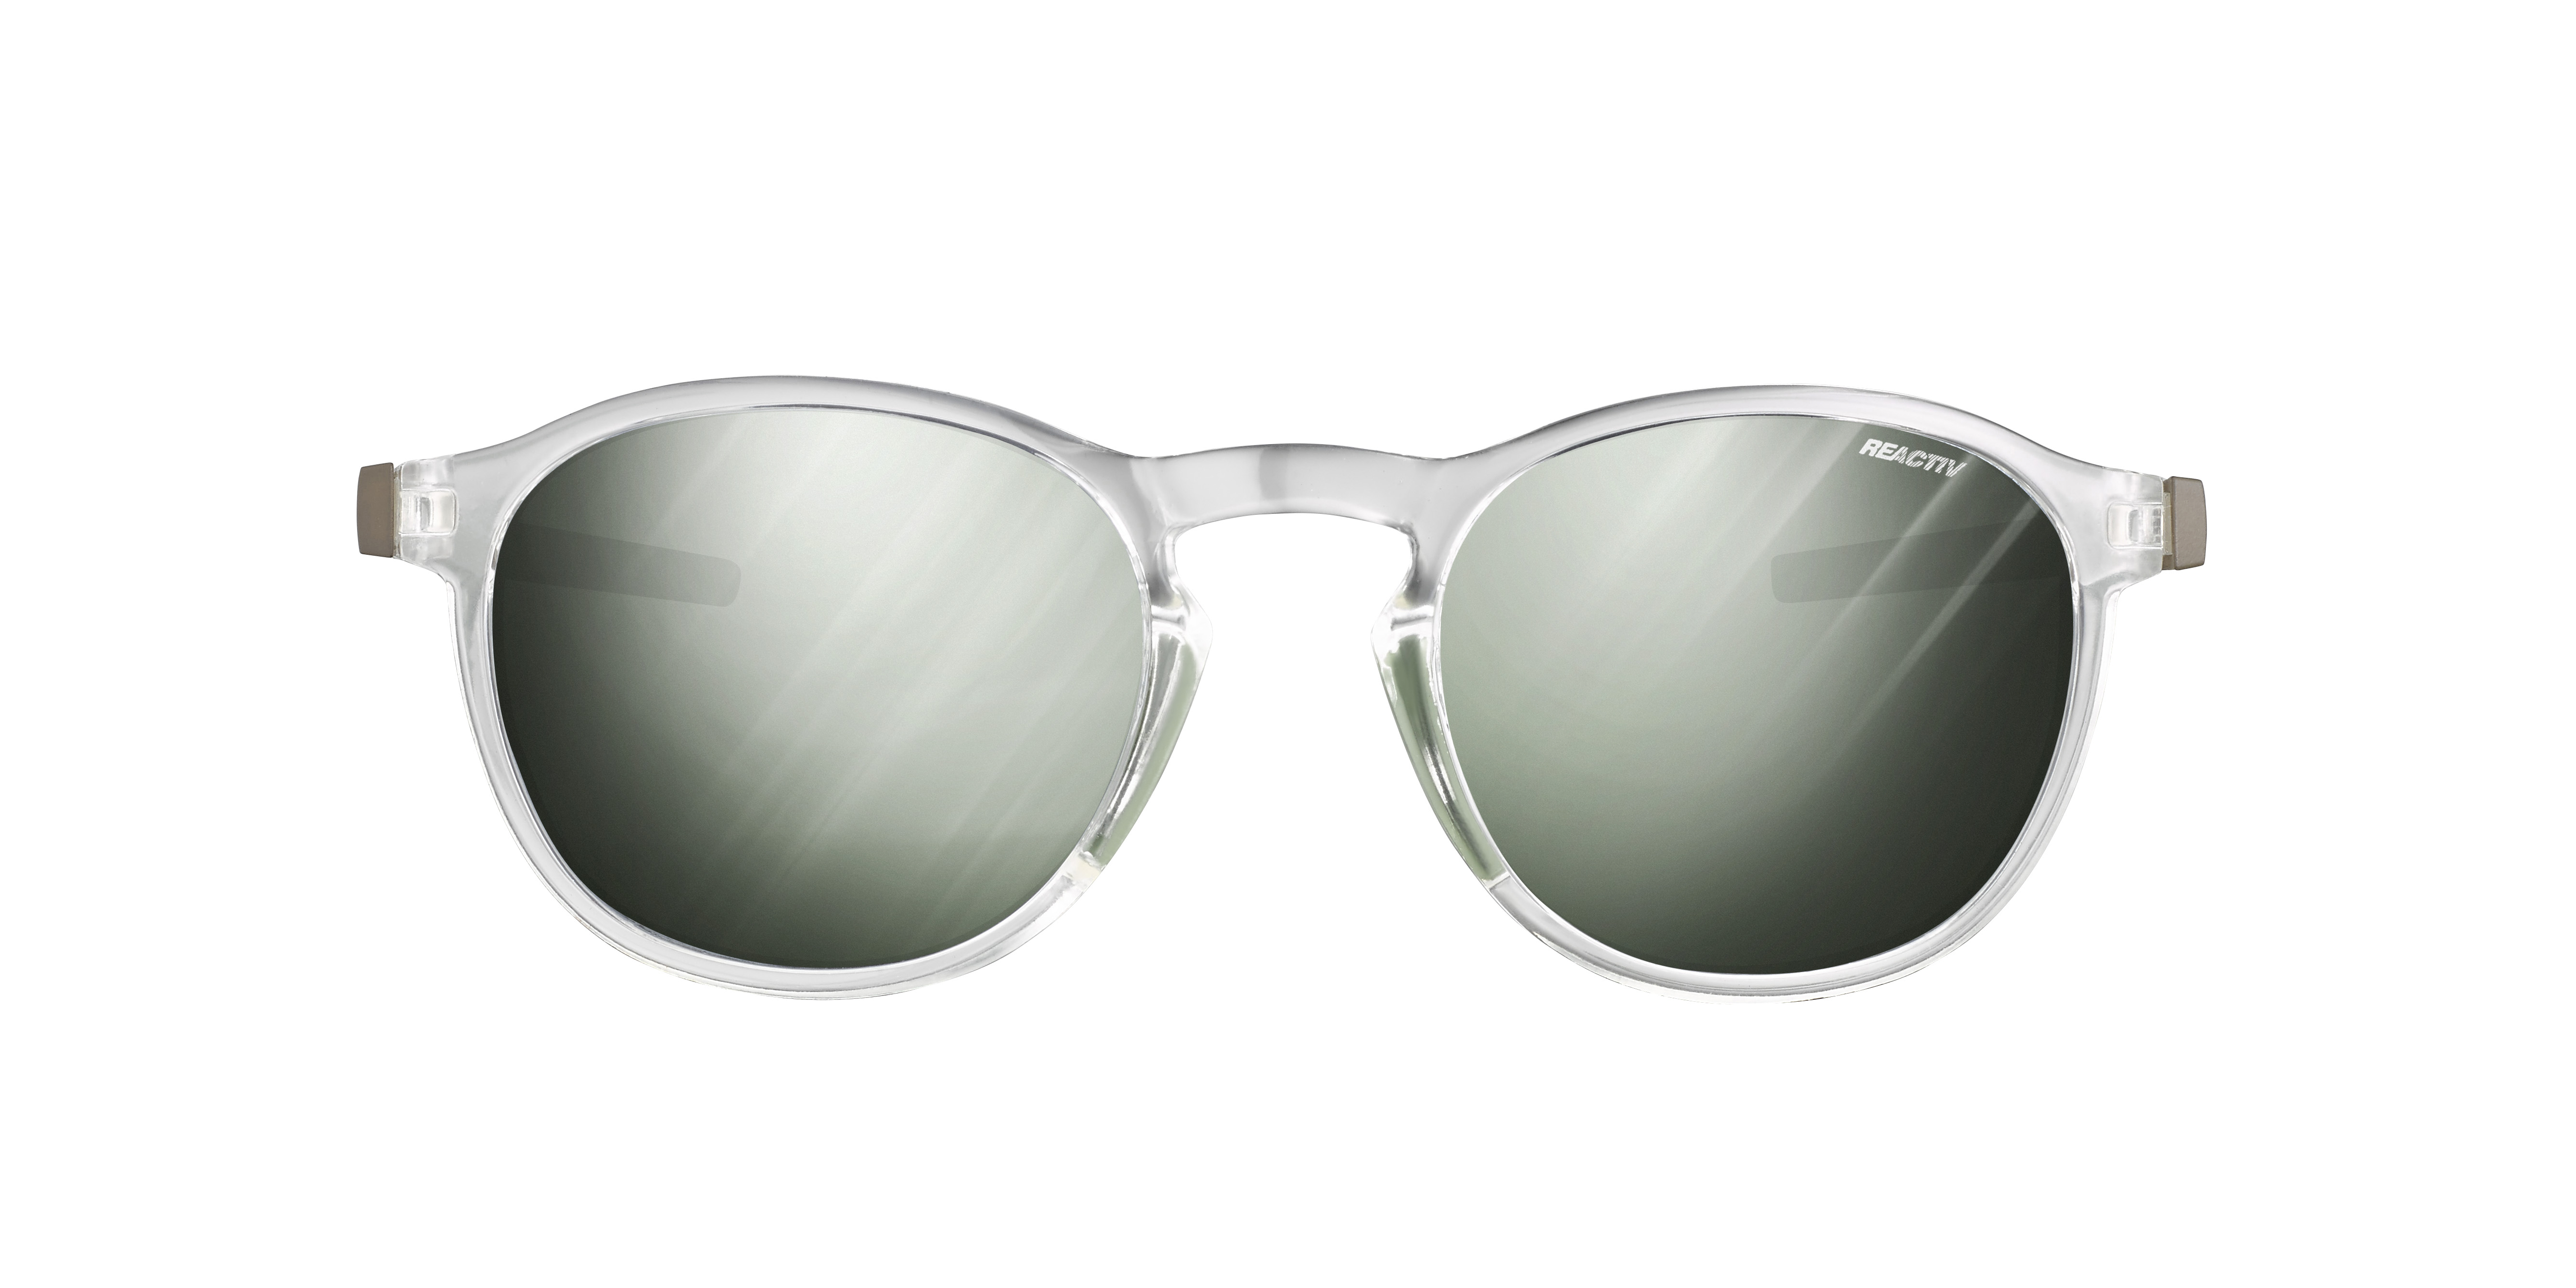 Sunglasses Julbo Js565 shine, green colour - Doyle